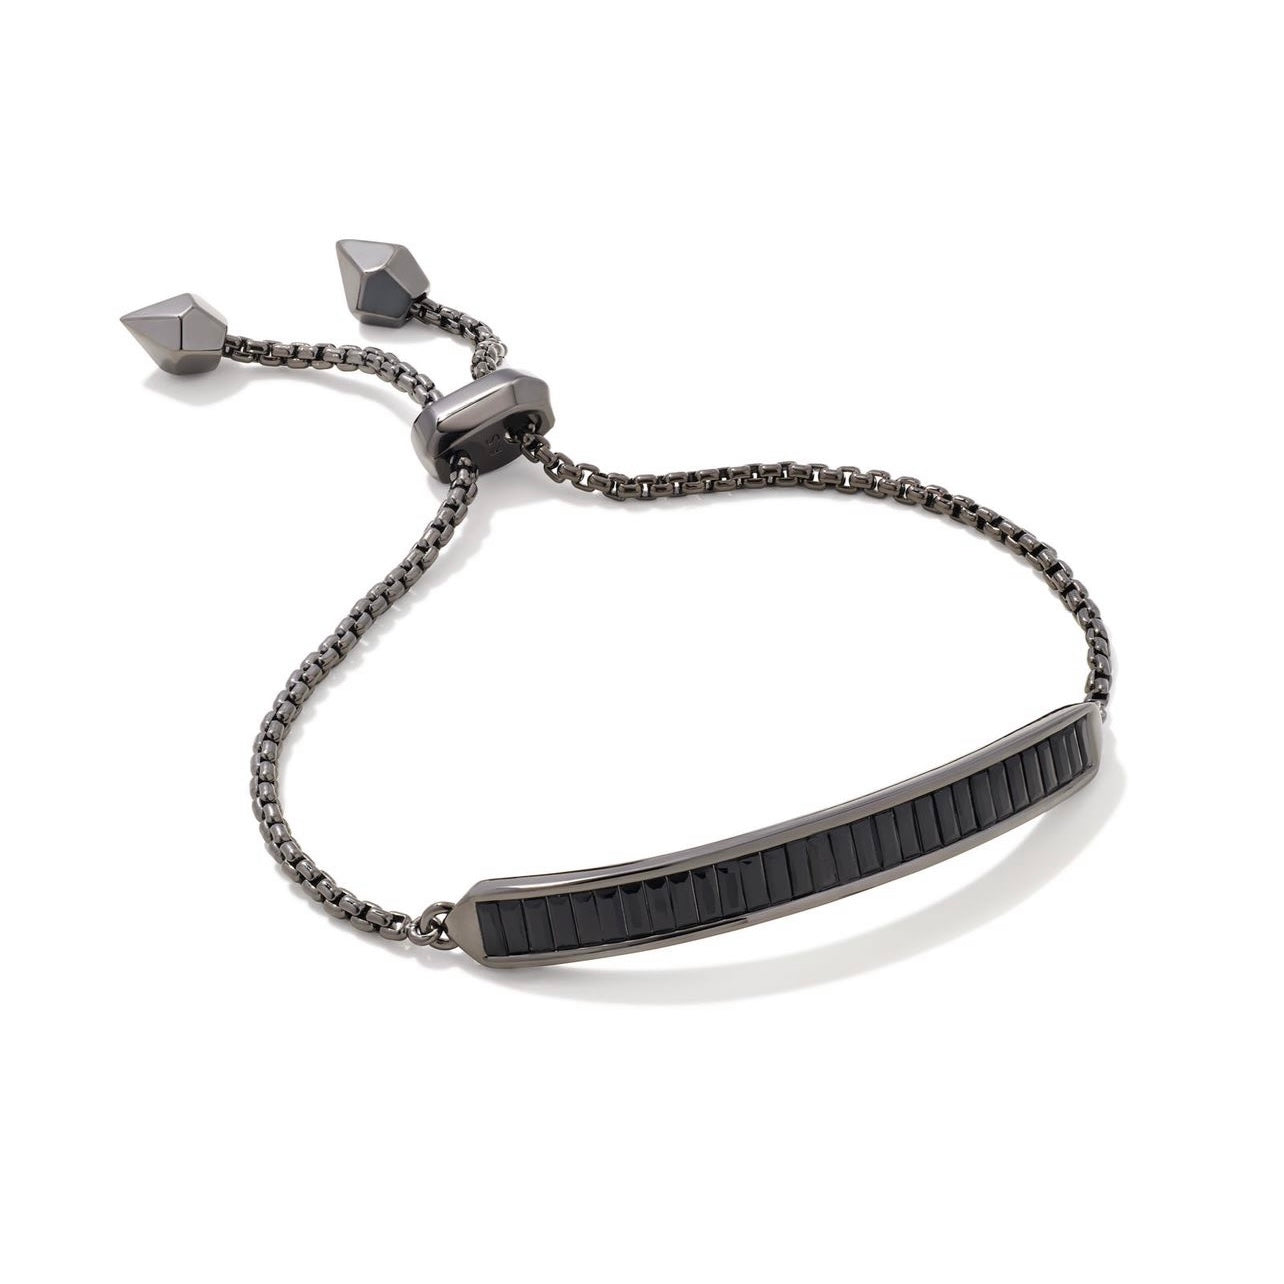 Kendra Scott Jack Gunmetal Adjustable Chain Bracelet in Black Spinel